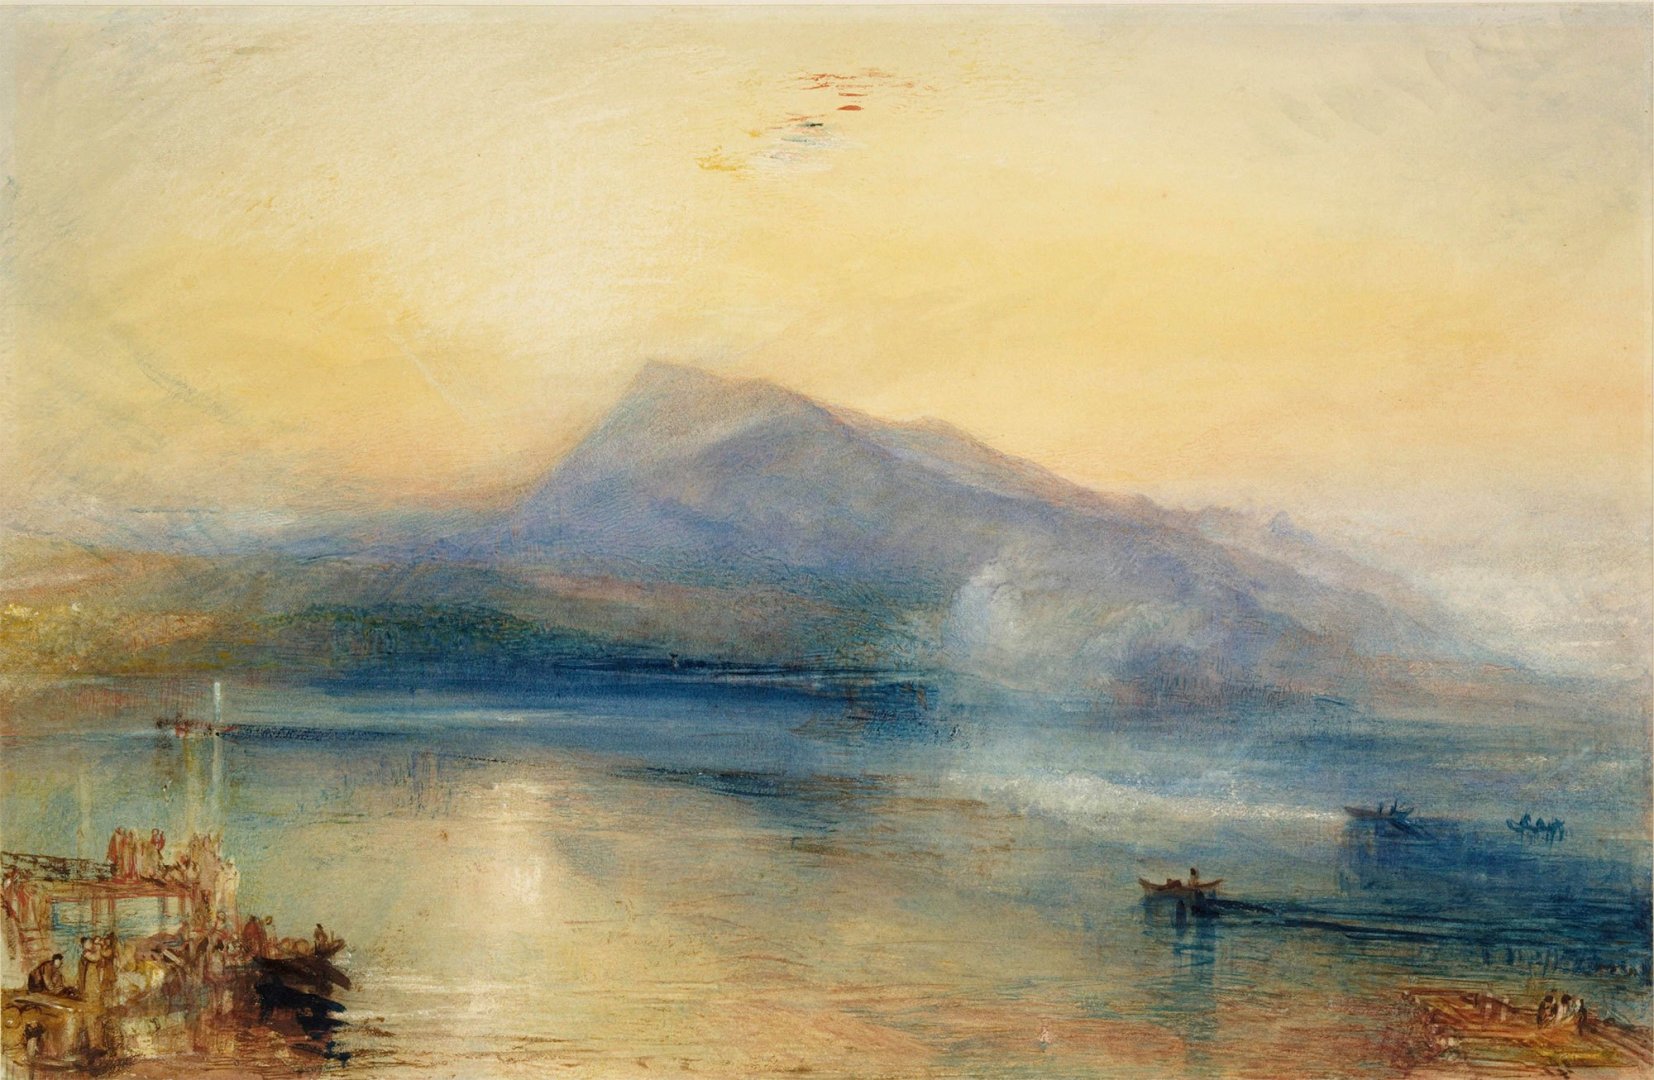 Jospeh Mallord William Turner: A Lucerni tó, napkeltében – forrás: Christie’s